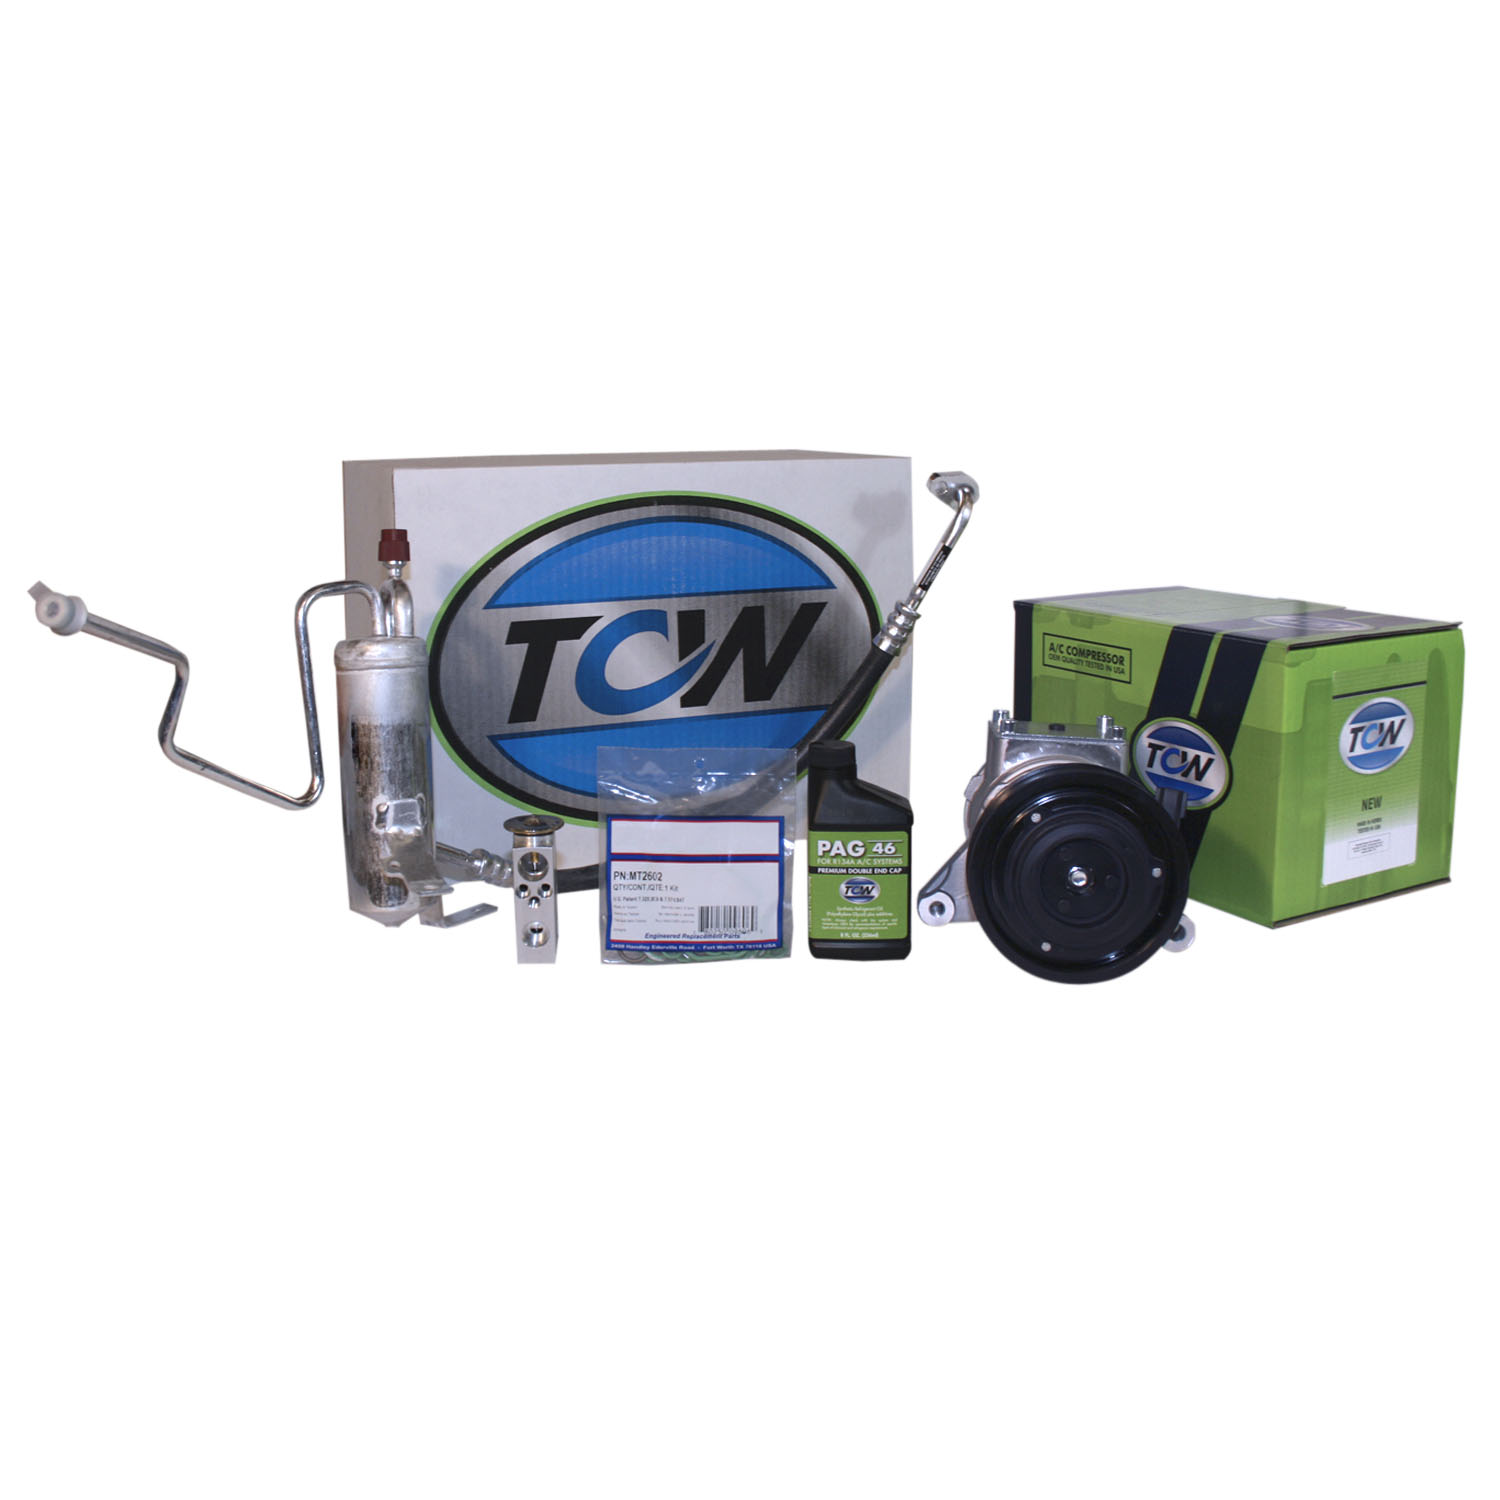 TCW Vehicle A/C Kit K1000213N New Product Image field_60b6a13a6e67c